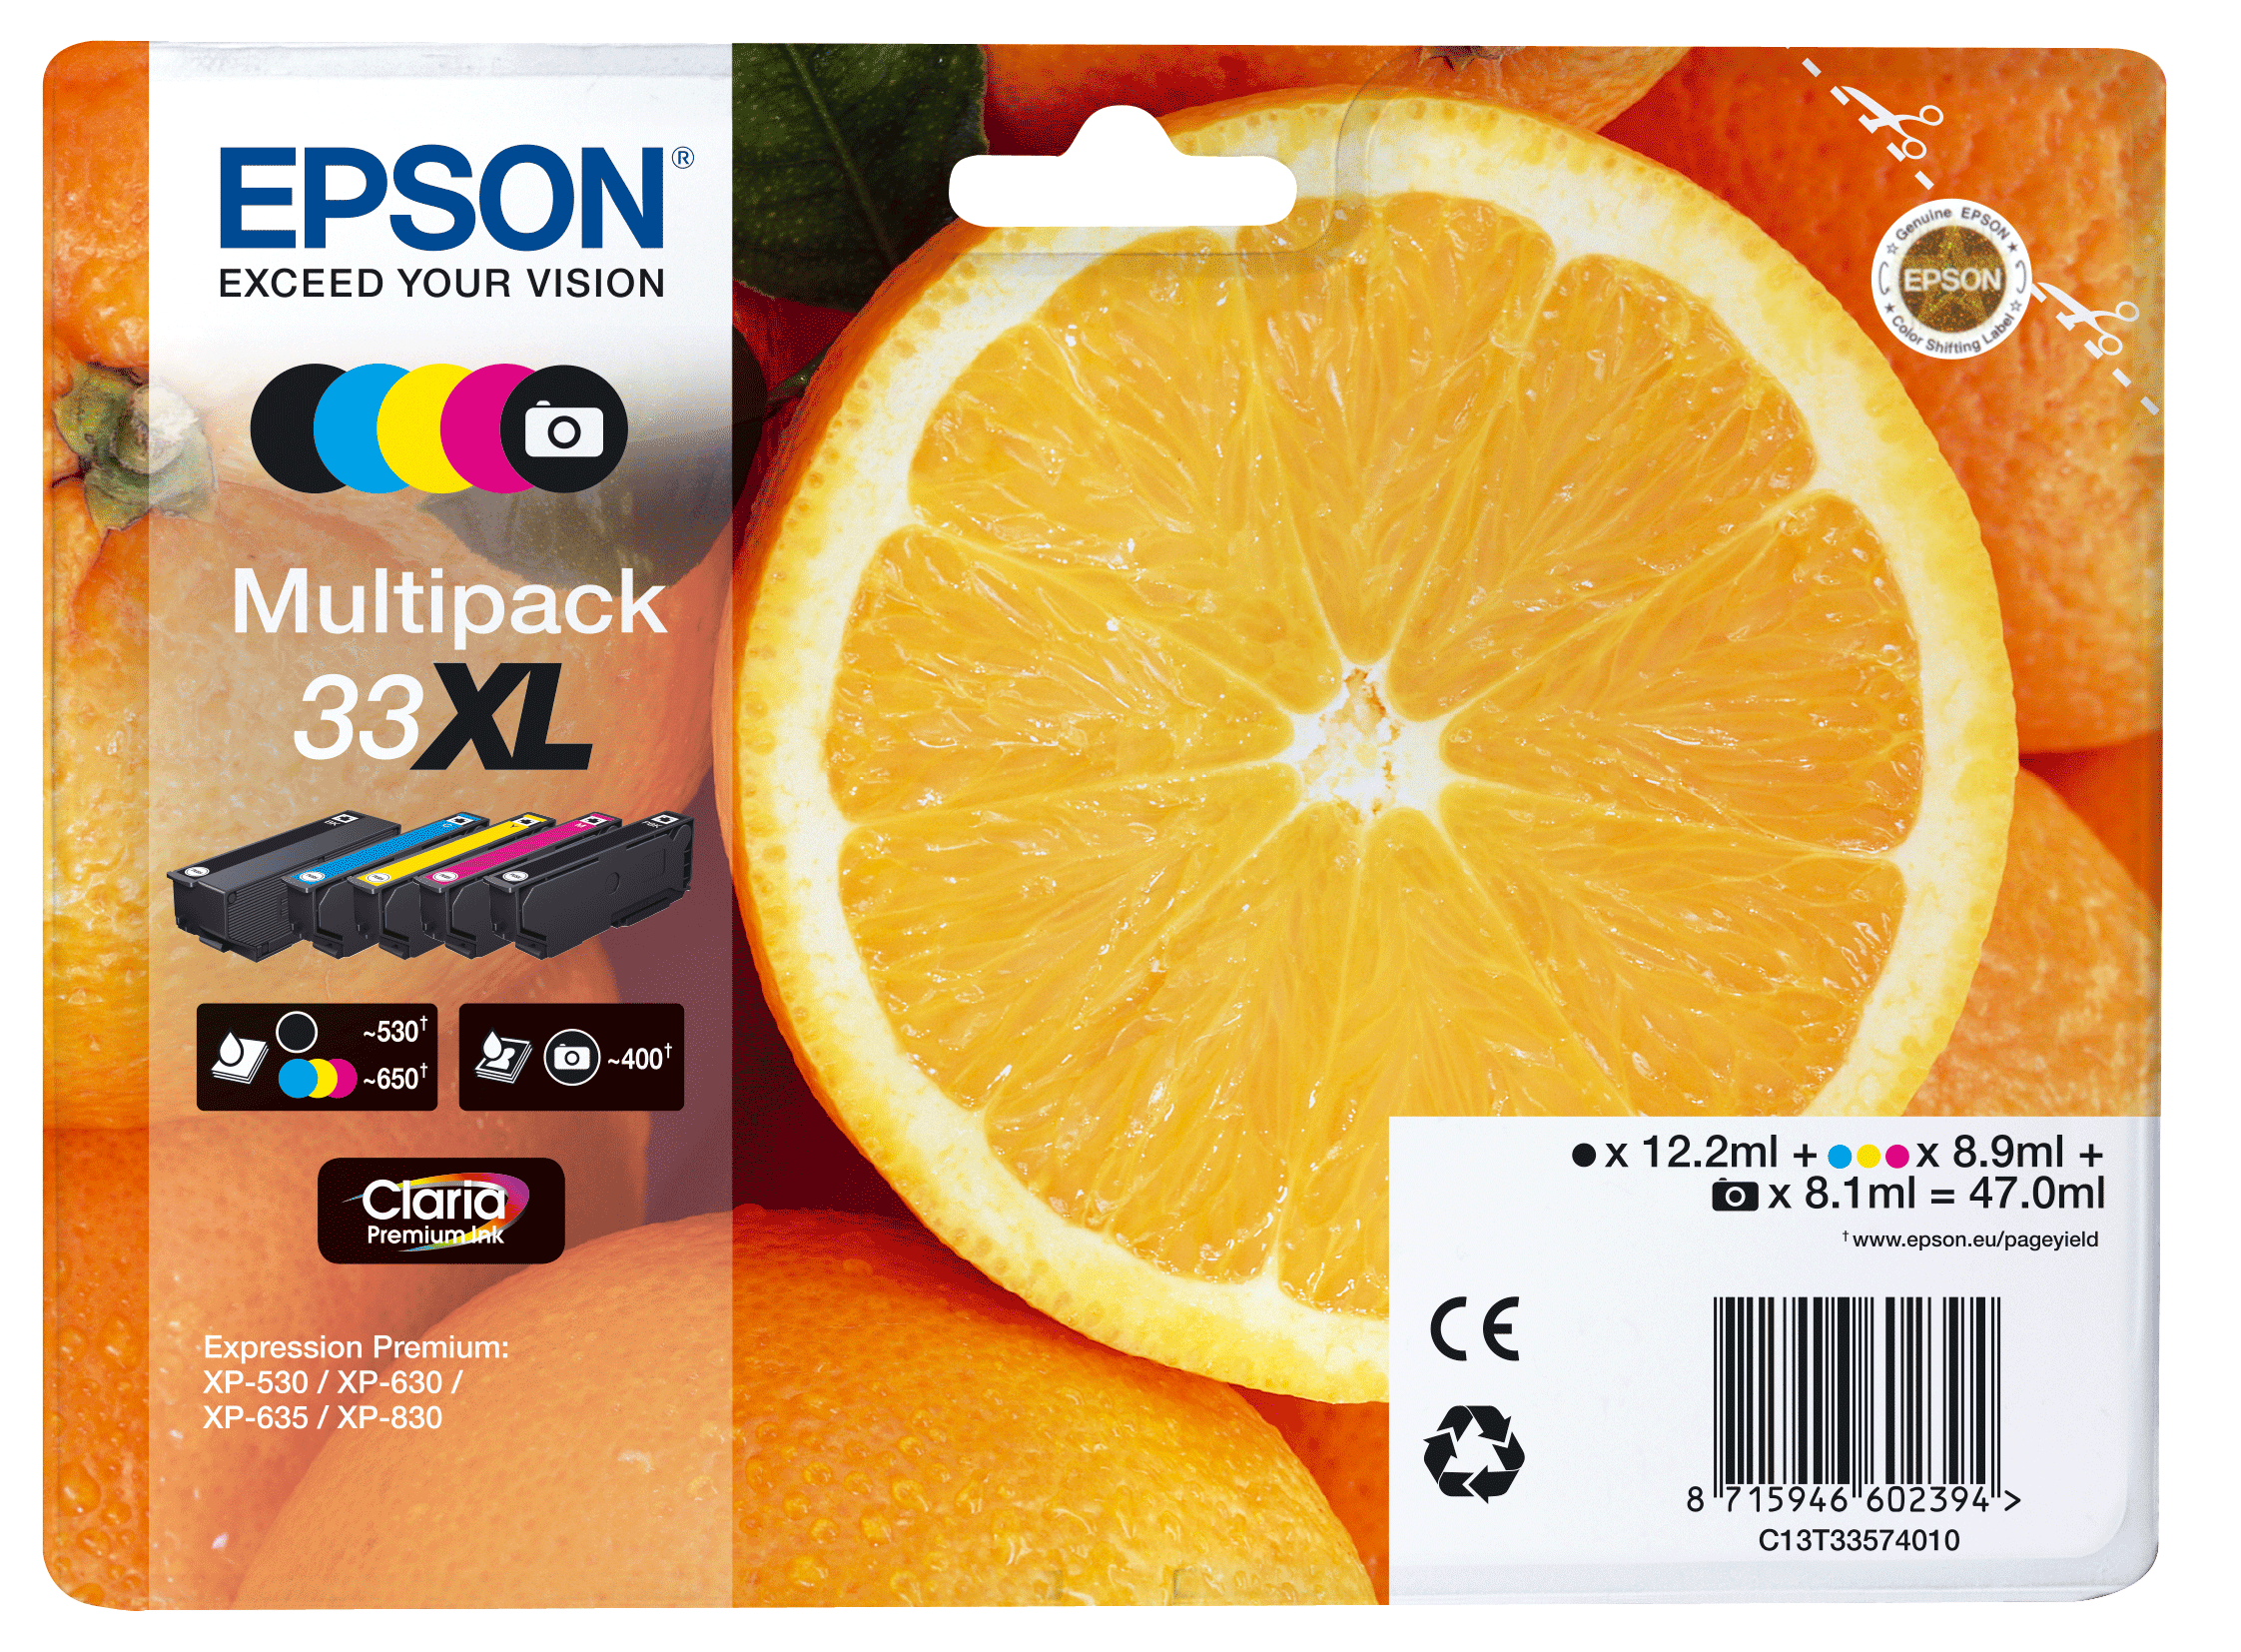 Epson Oranges Multipack 5-colours 33XL Claria Premium Ink single pack / cyaan, foto zwart, geel, magenta, zwart